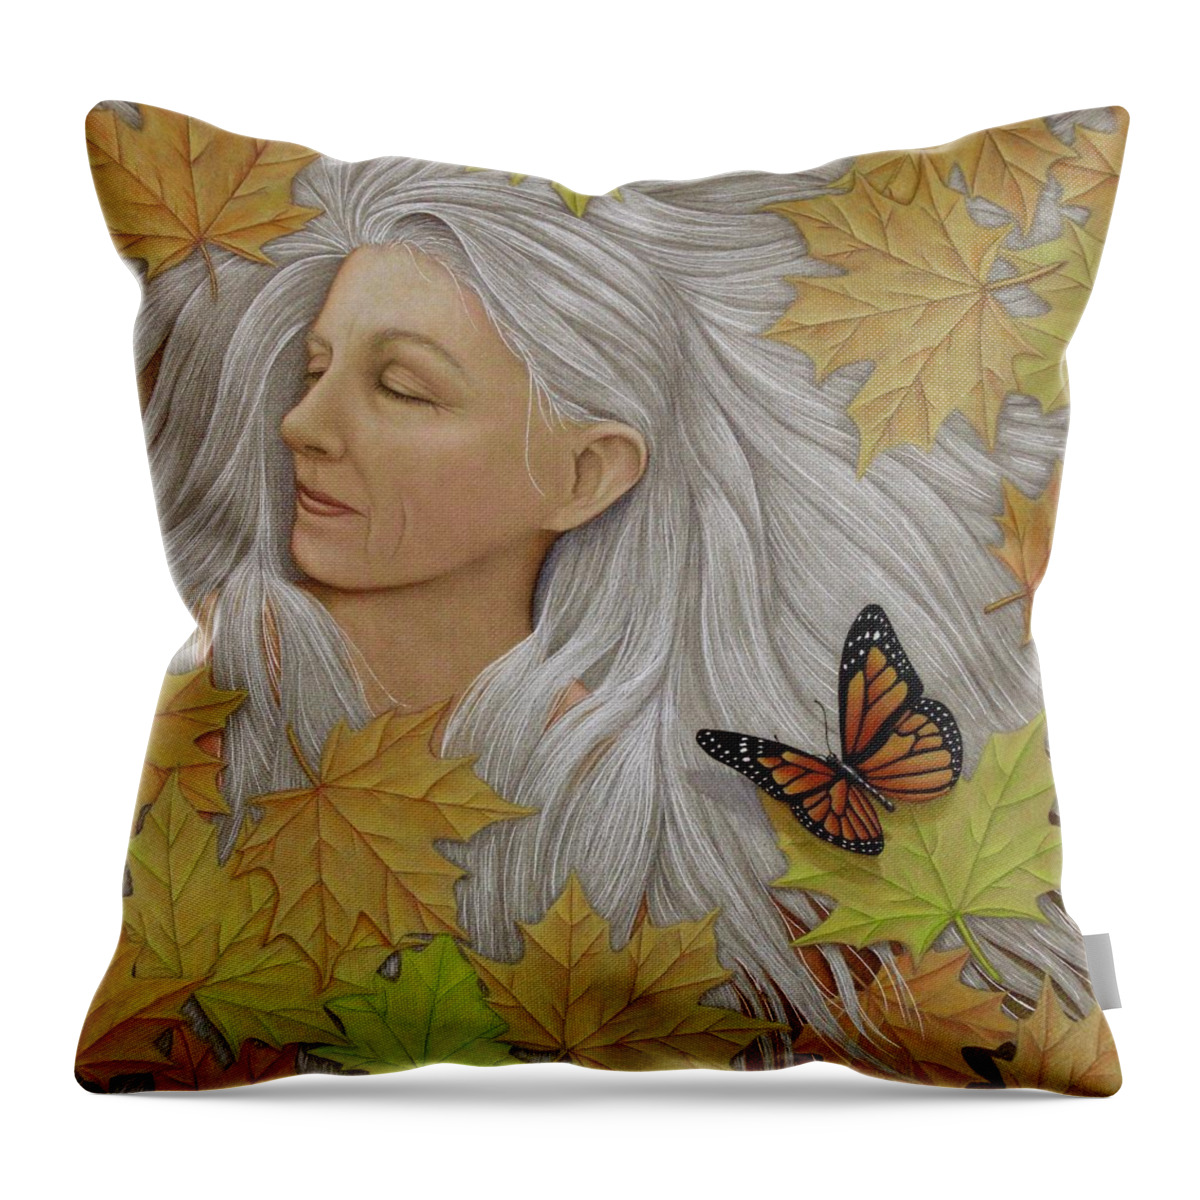 Kim Mcclinton Throw Pillow featuring the drawing Dream Within a Dream by Kim McClinton